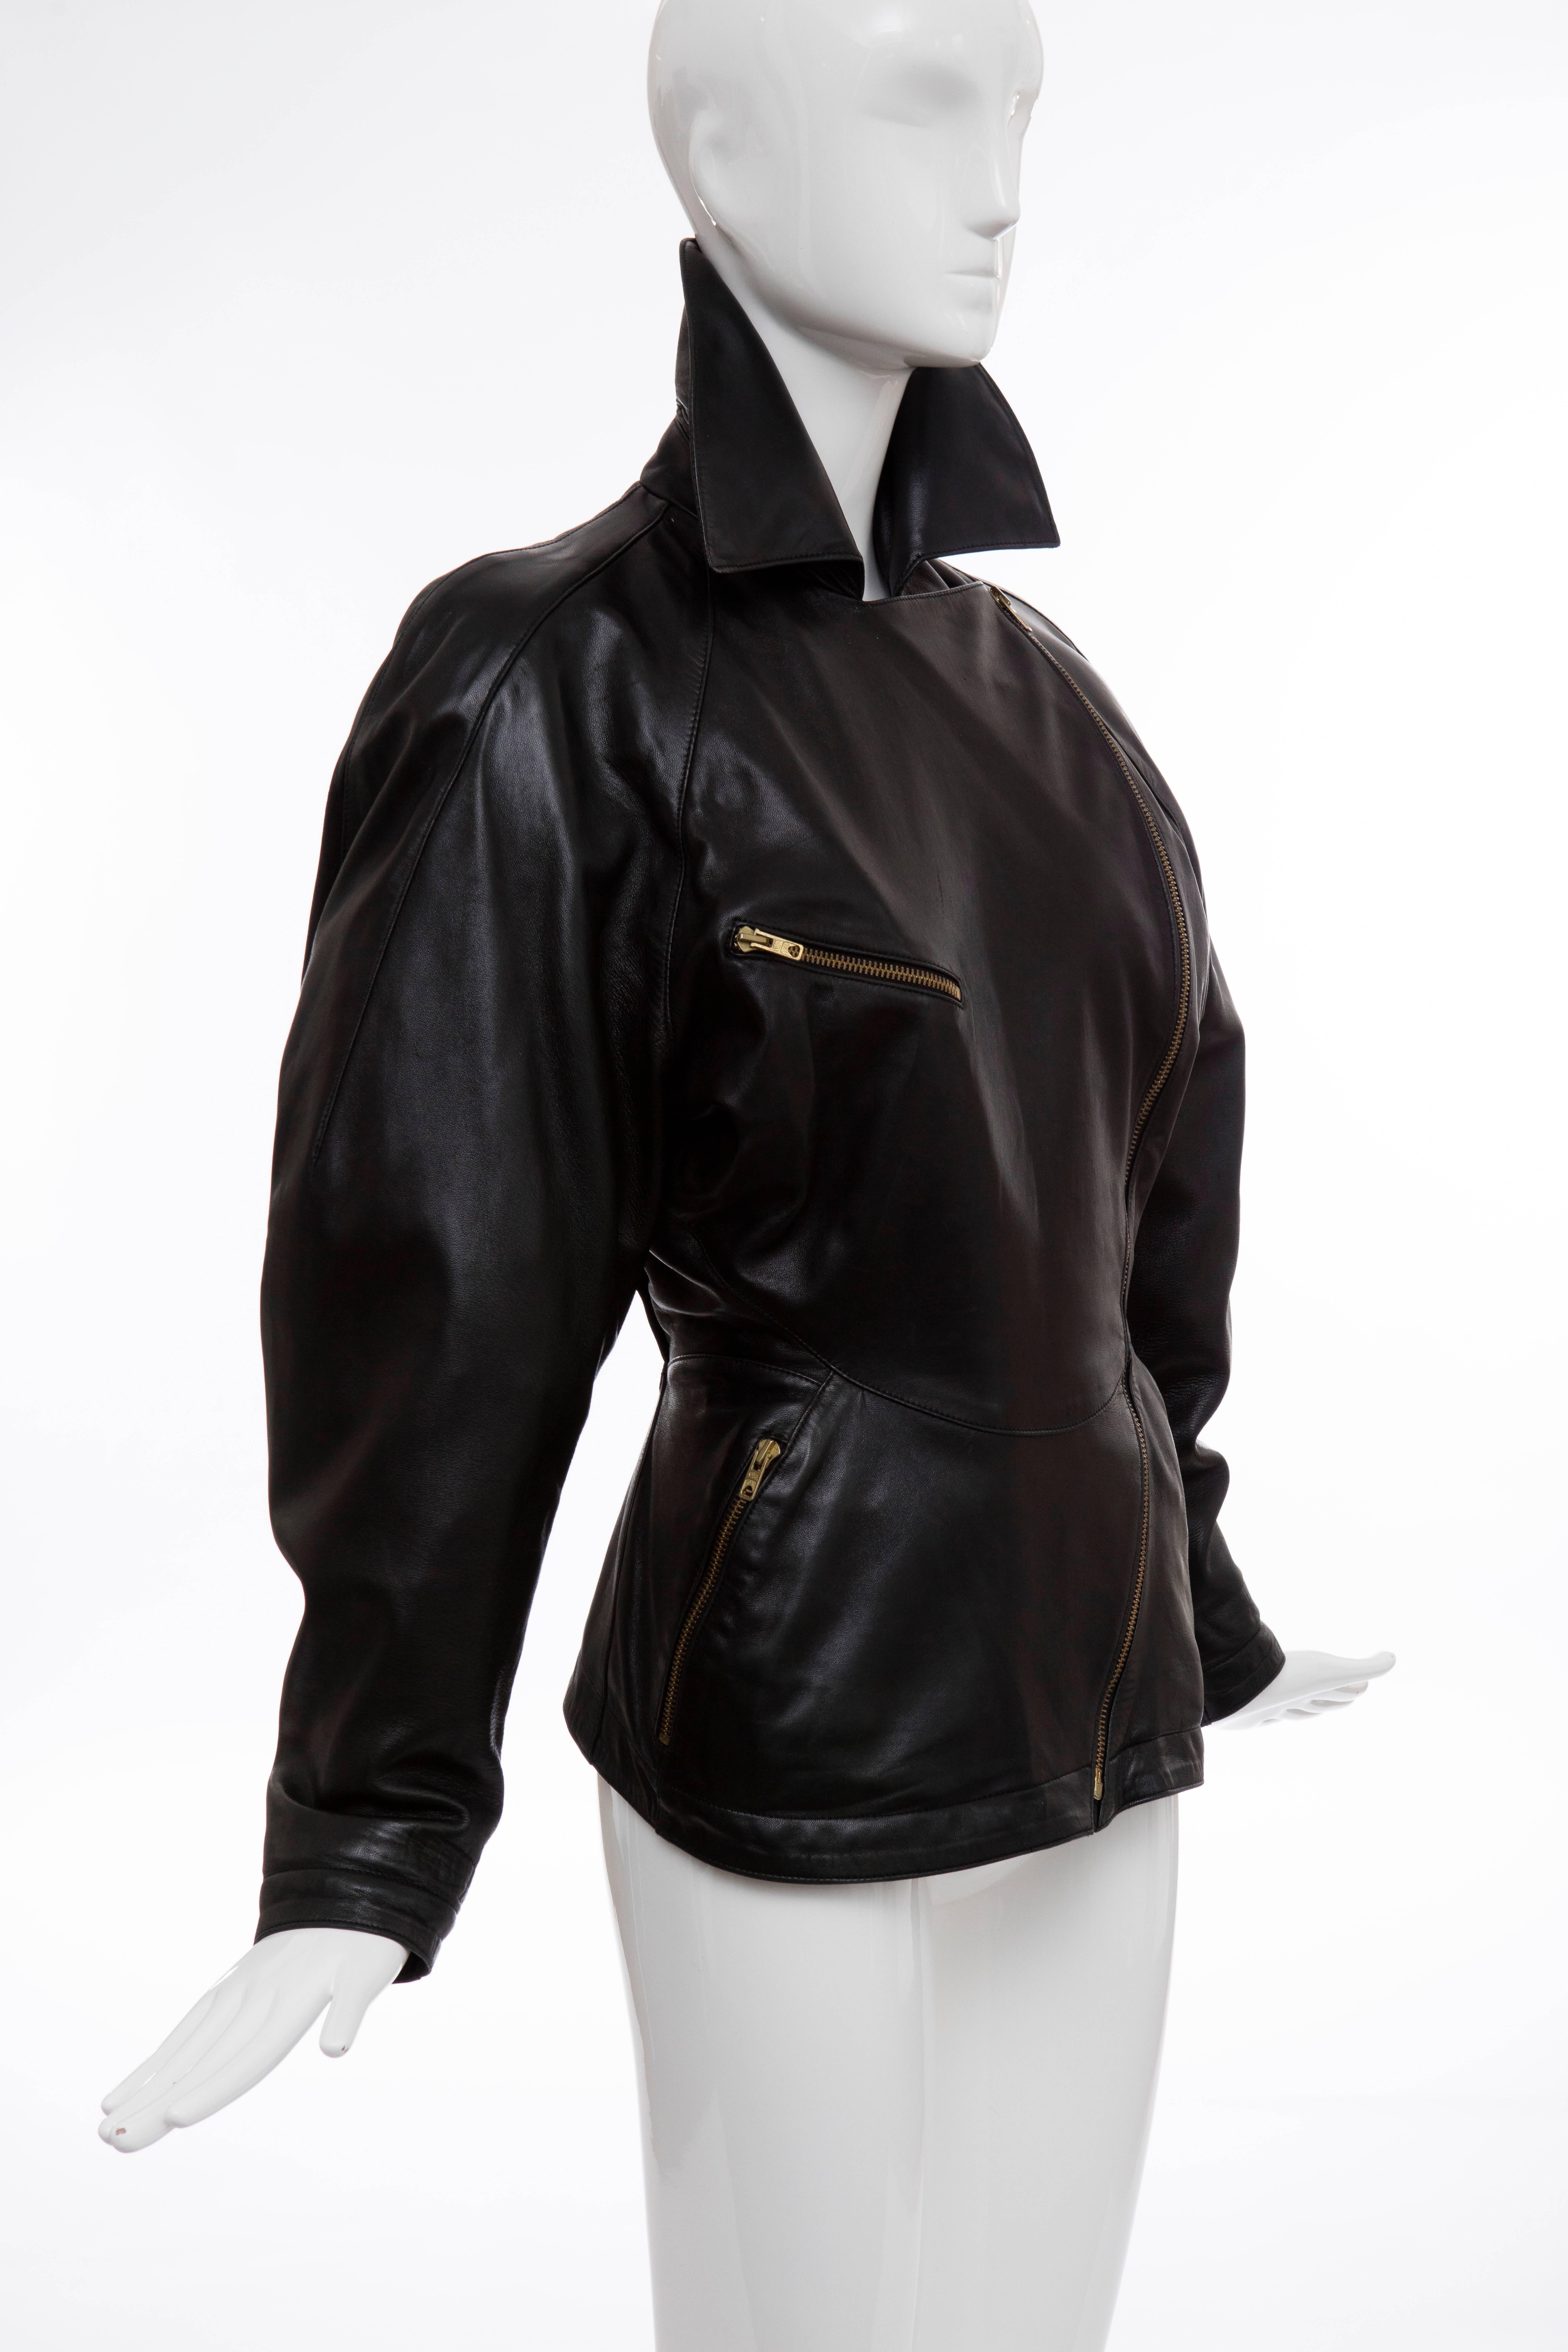 Azzedine Alai Black Zip Front Lambskin Leather Jacket , Circa 1986 For Sale 1